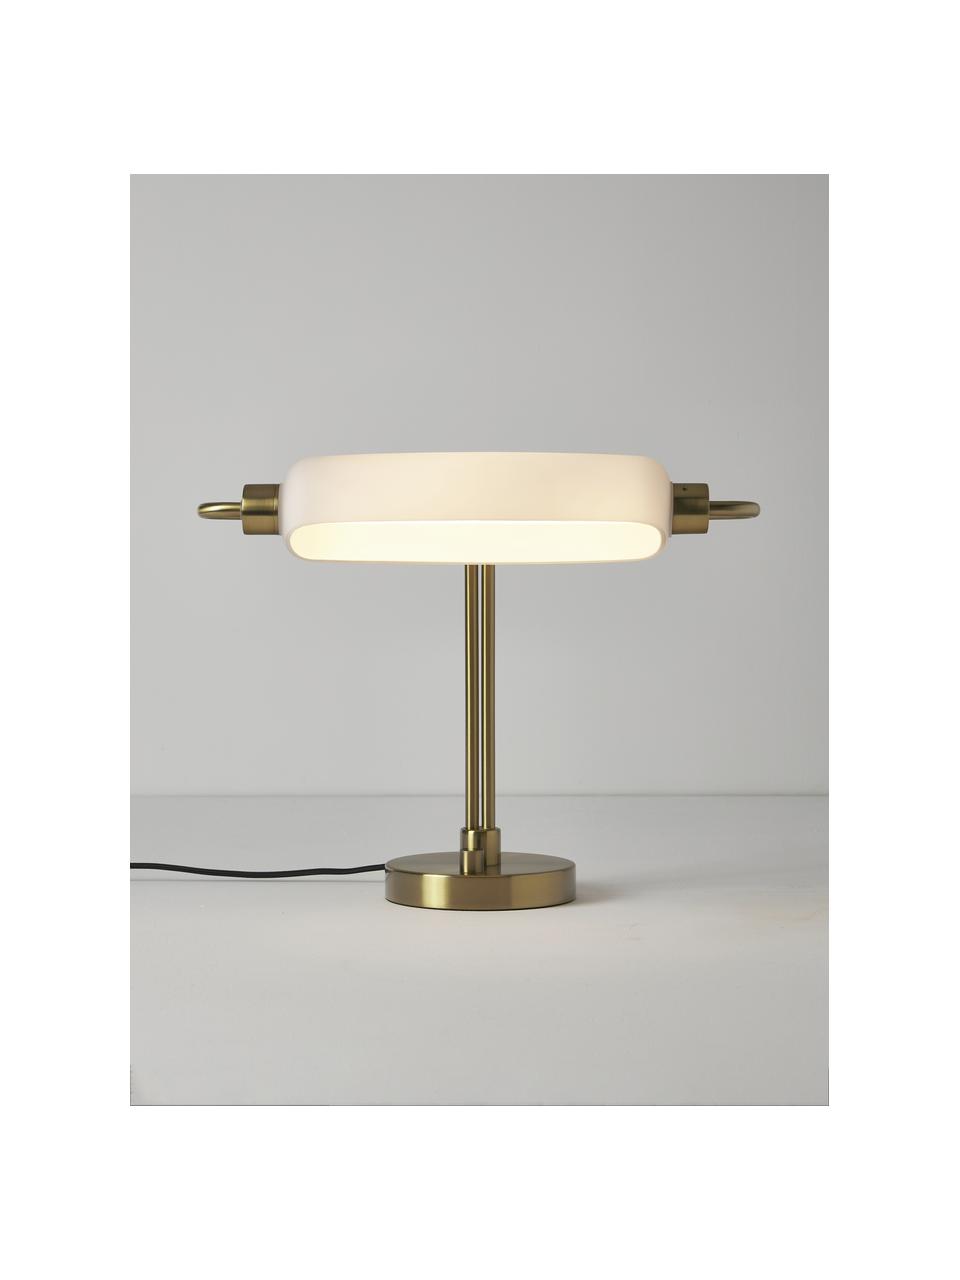 LED-Tischlampe Tate in Messingfarben, Lampenschirm: Opalglas, Gold,Weiß, B 44 x H 51 cm